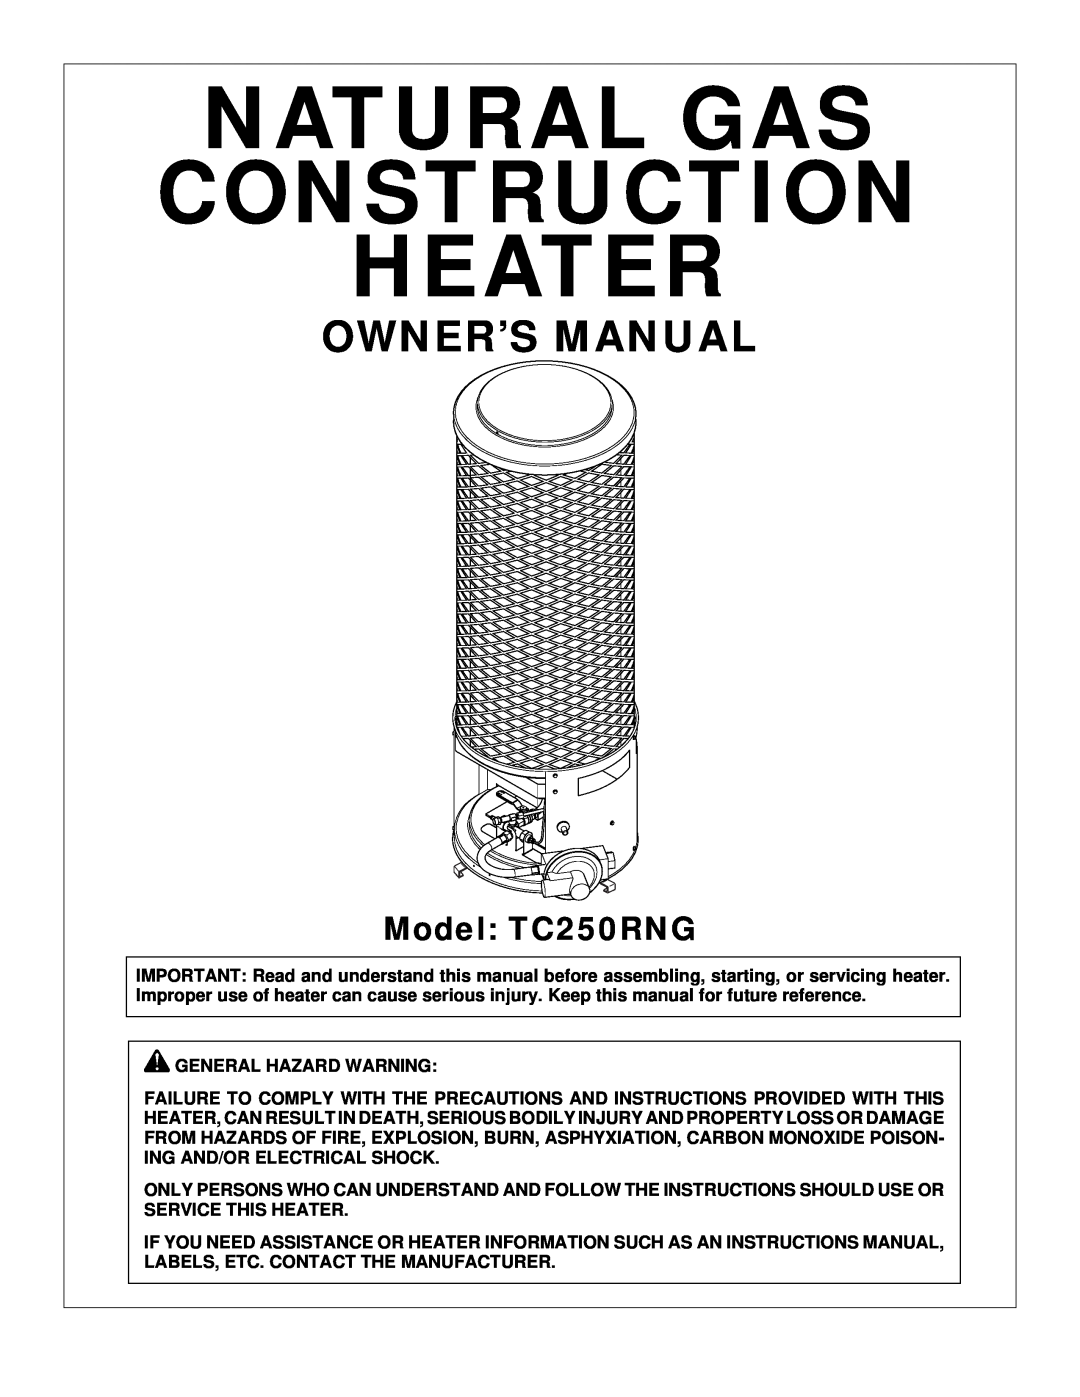 Desa owner manual Model TC250RNG, Natural Gas Construction Heater 